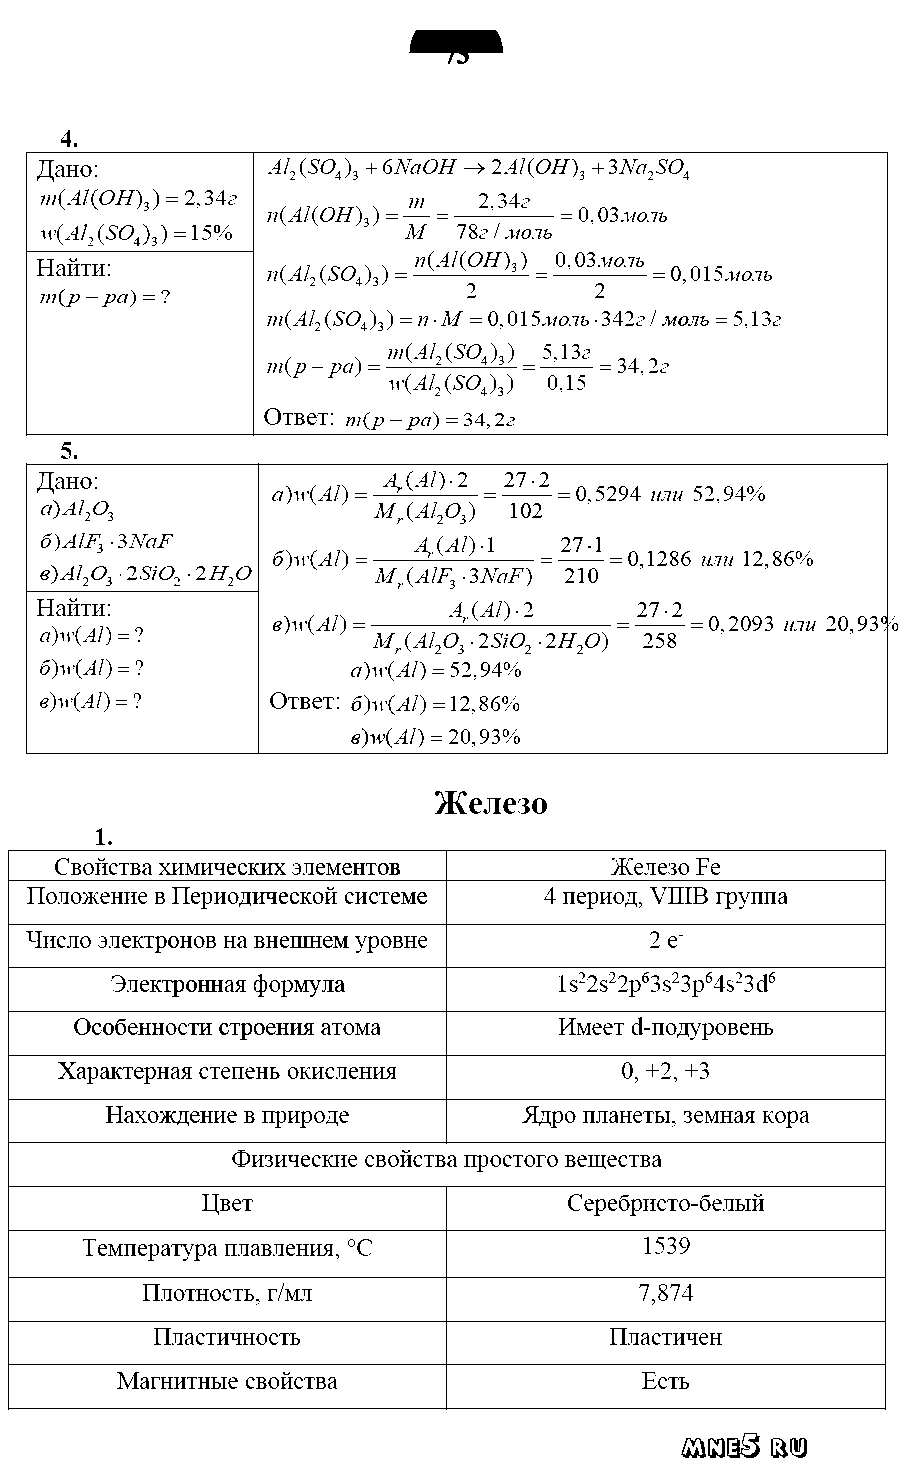 ГДЗ Химия 9 класс - стр. 73